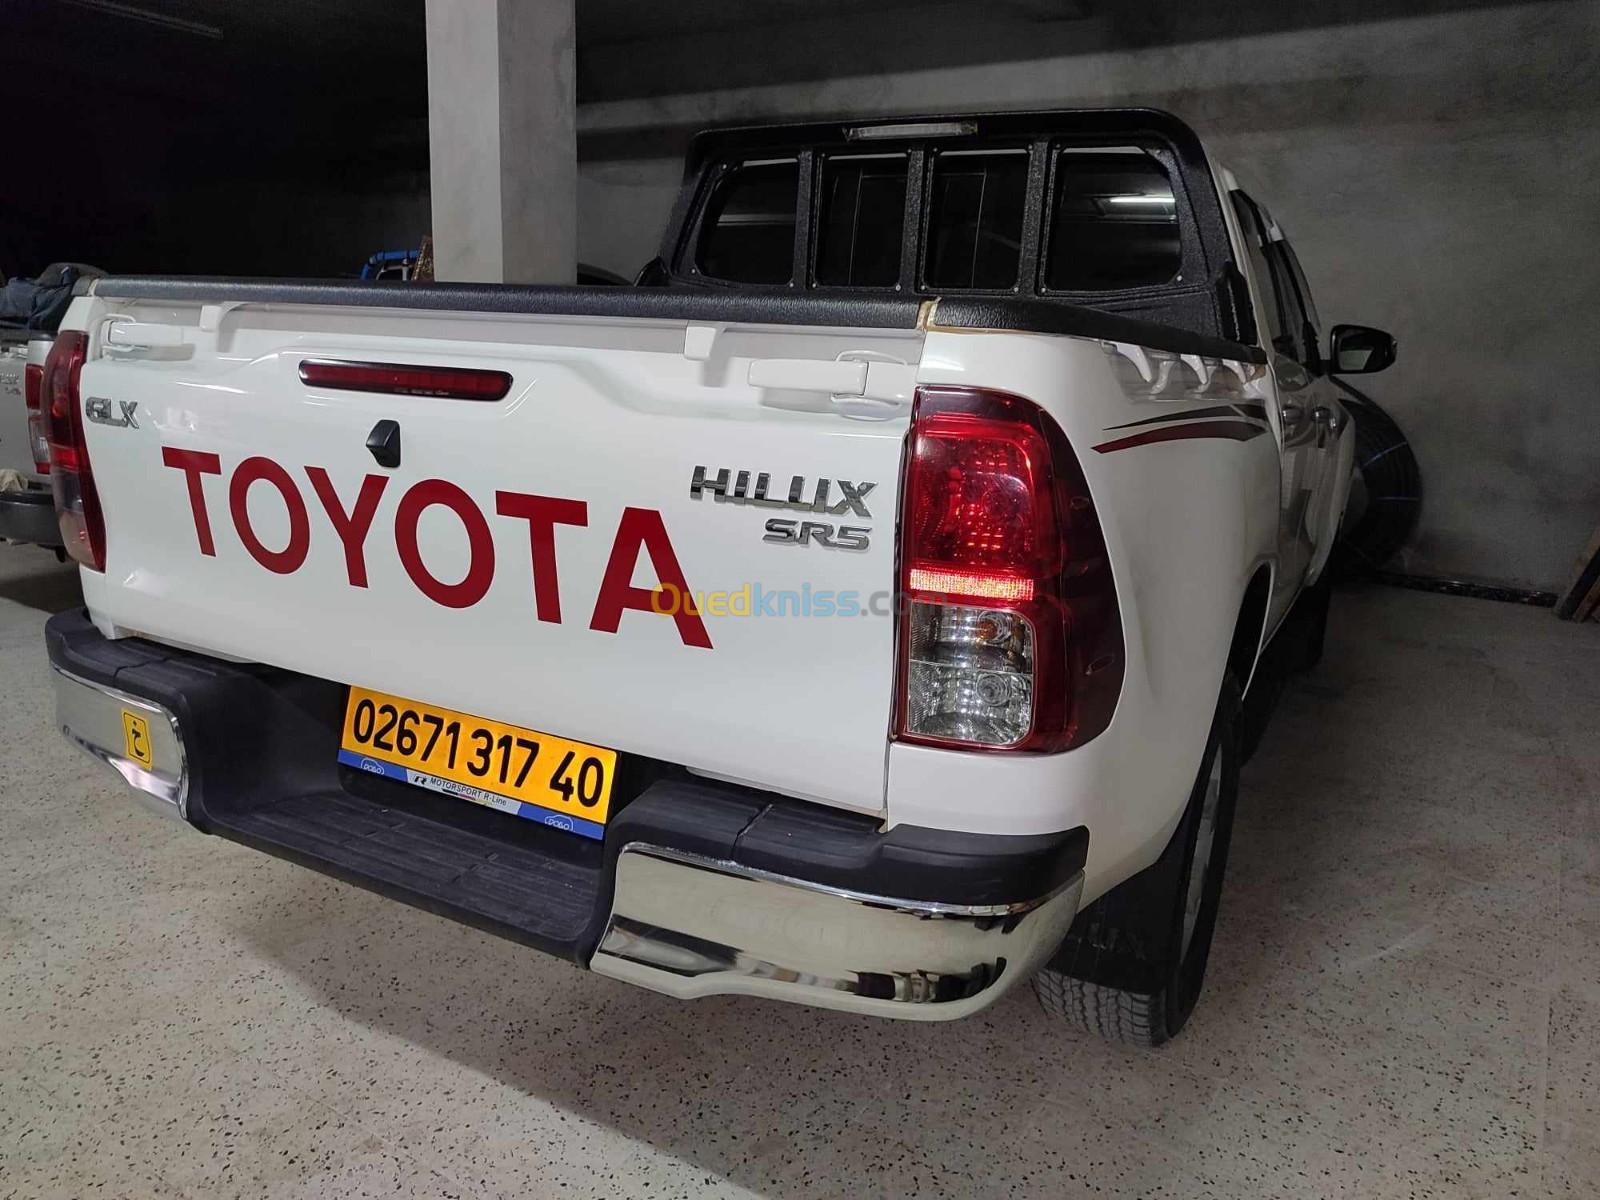 Toyota Hilux 2017 LEGEND SC 4x4